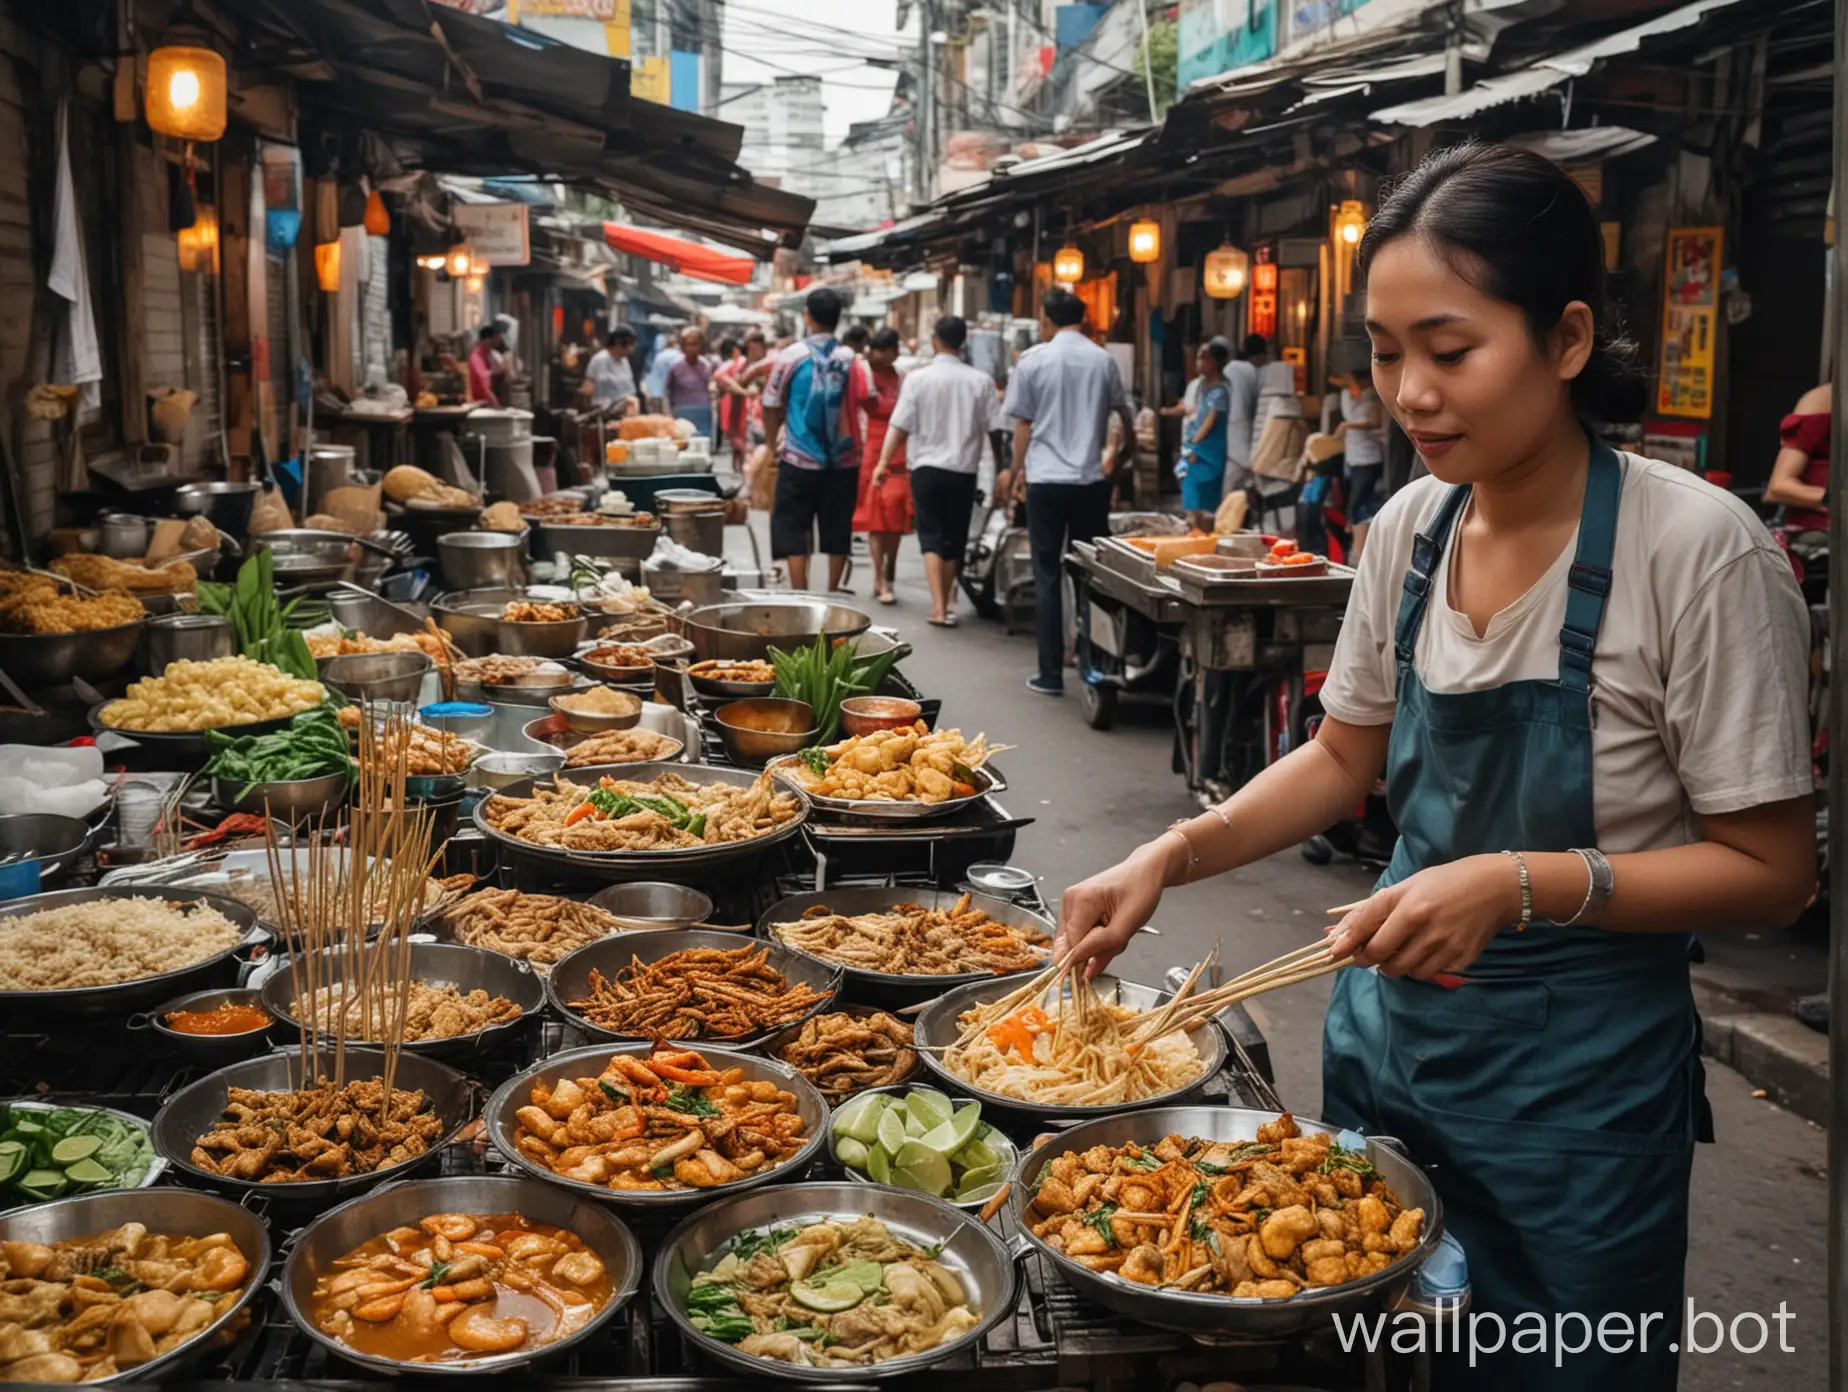 Authentic-Thai-Street-Food-Vendor-in-the-Vibrant-Backstreets-of-Bangkok